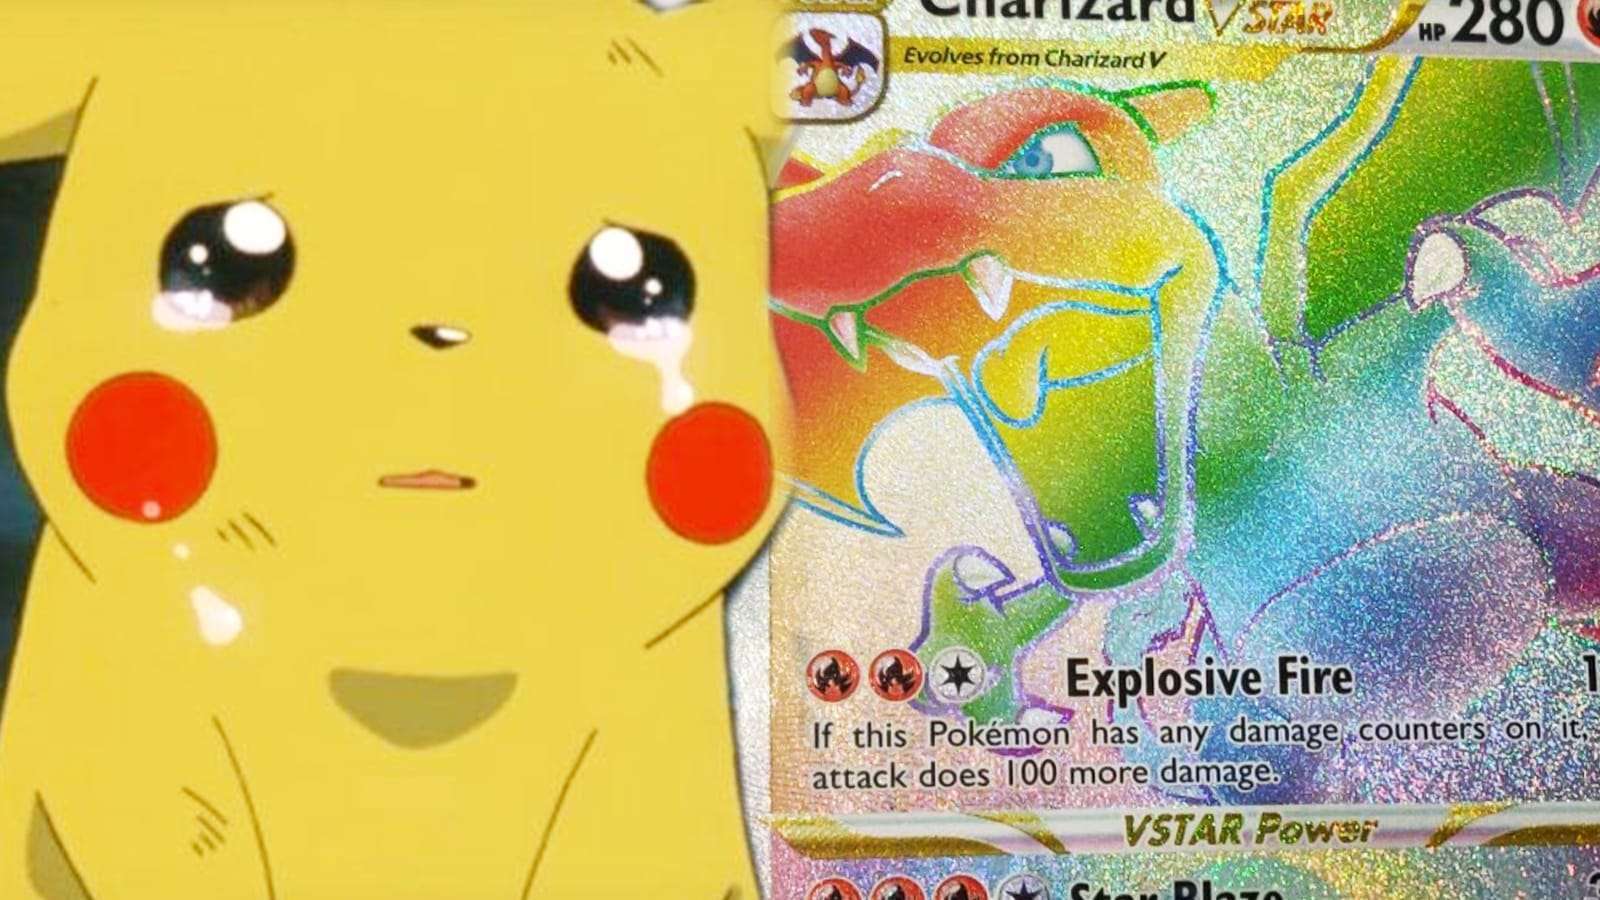 Pikachu crying from the Pokemon anime next to Rainbow Charizard VSTAR Pokemon card screenshot.